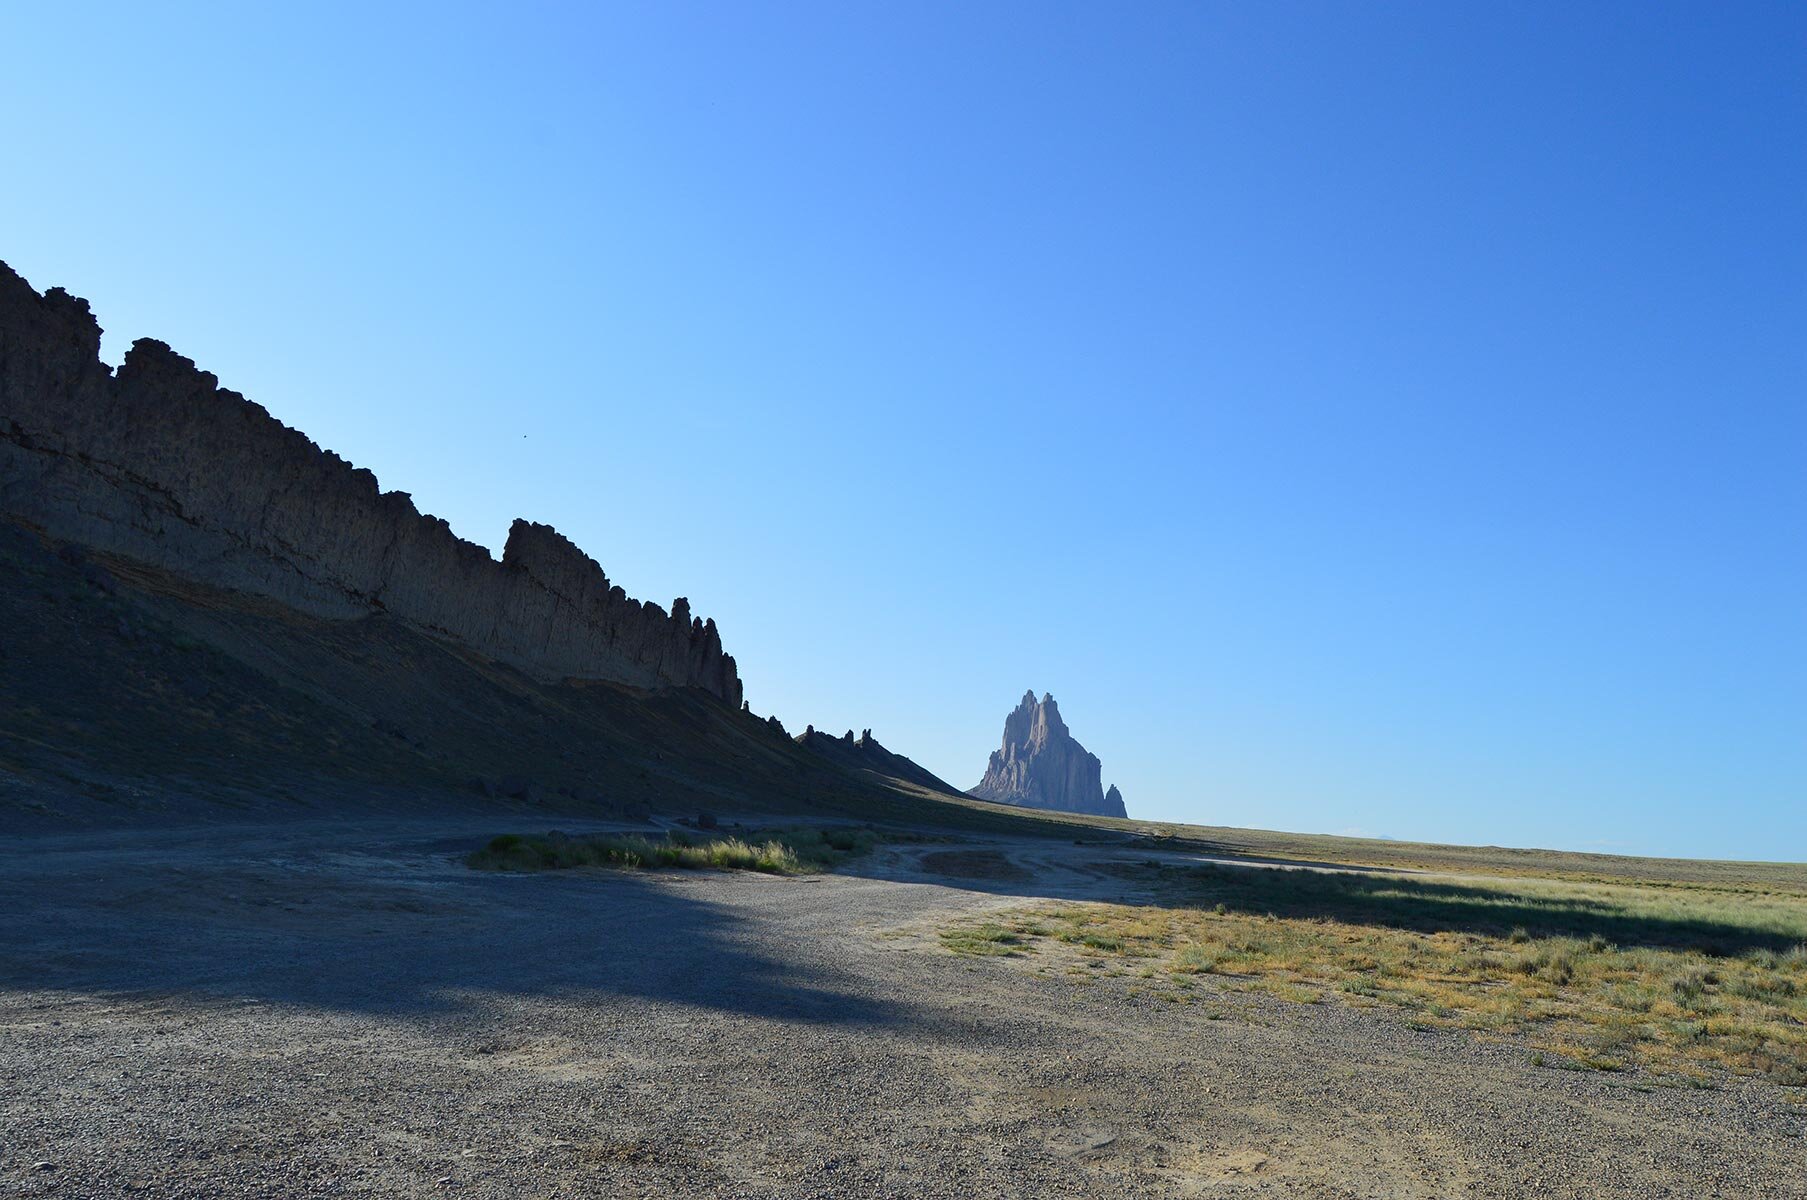 Navajo Reservation, Shiprock, NM (South), June 